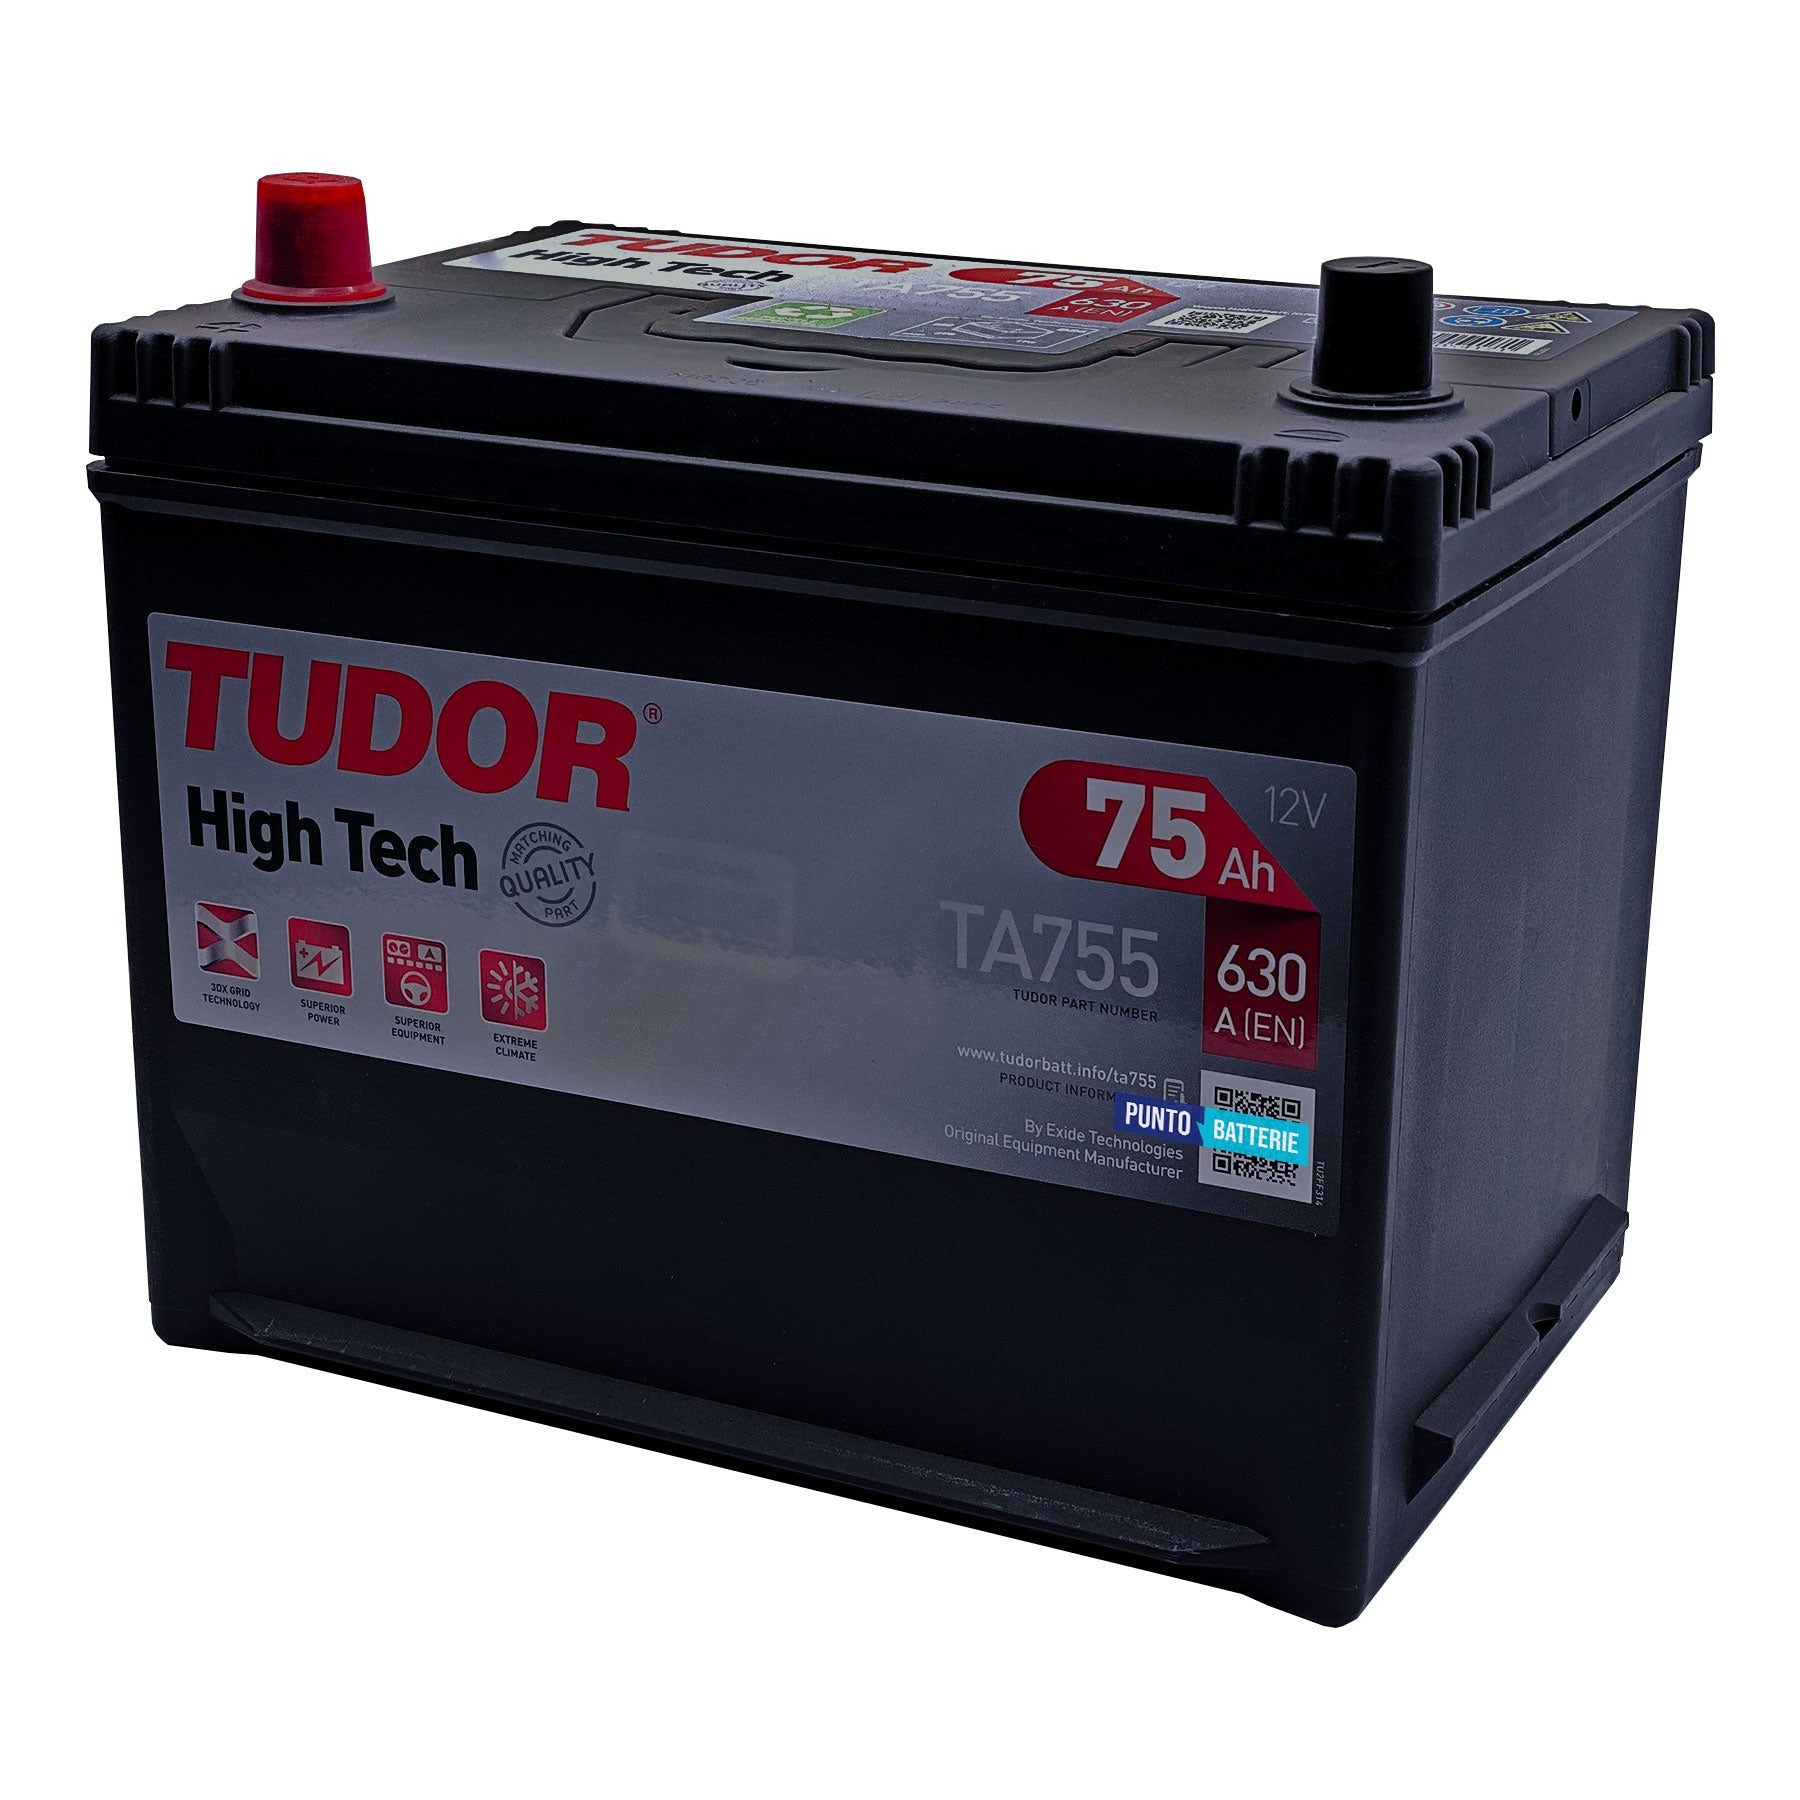 Batteria Tudor TA755 - High Tech (12V, 75Ah, 630A) - Puntobatterie